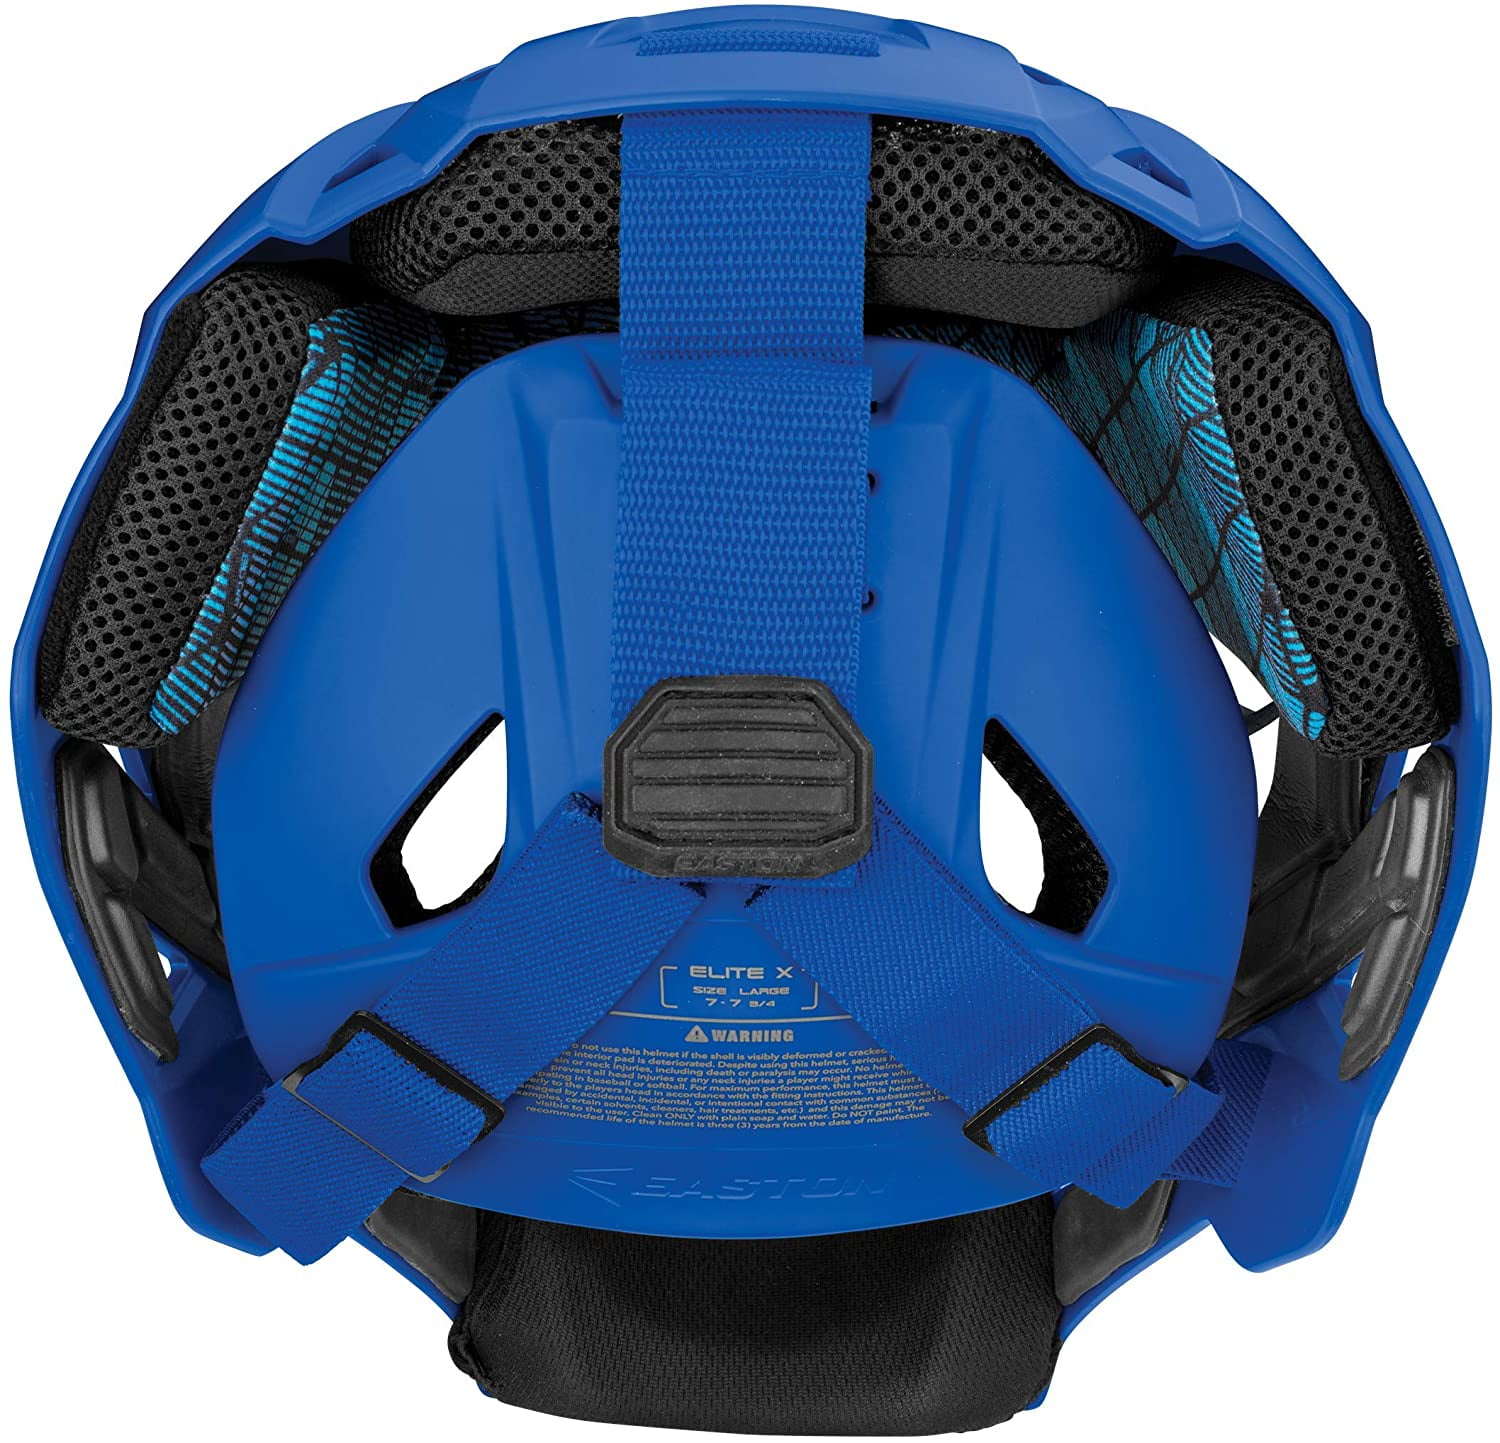 23954円 日本製 EASTON ELITE X Catcher's Helmet Large Matte Black